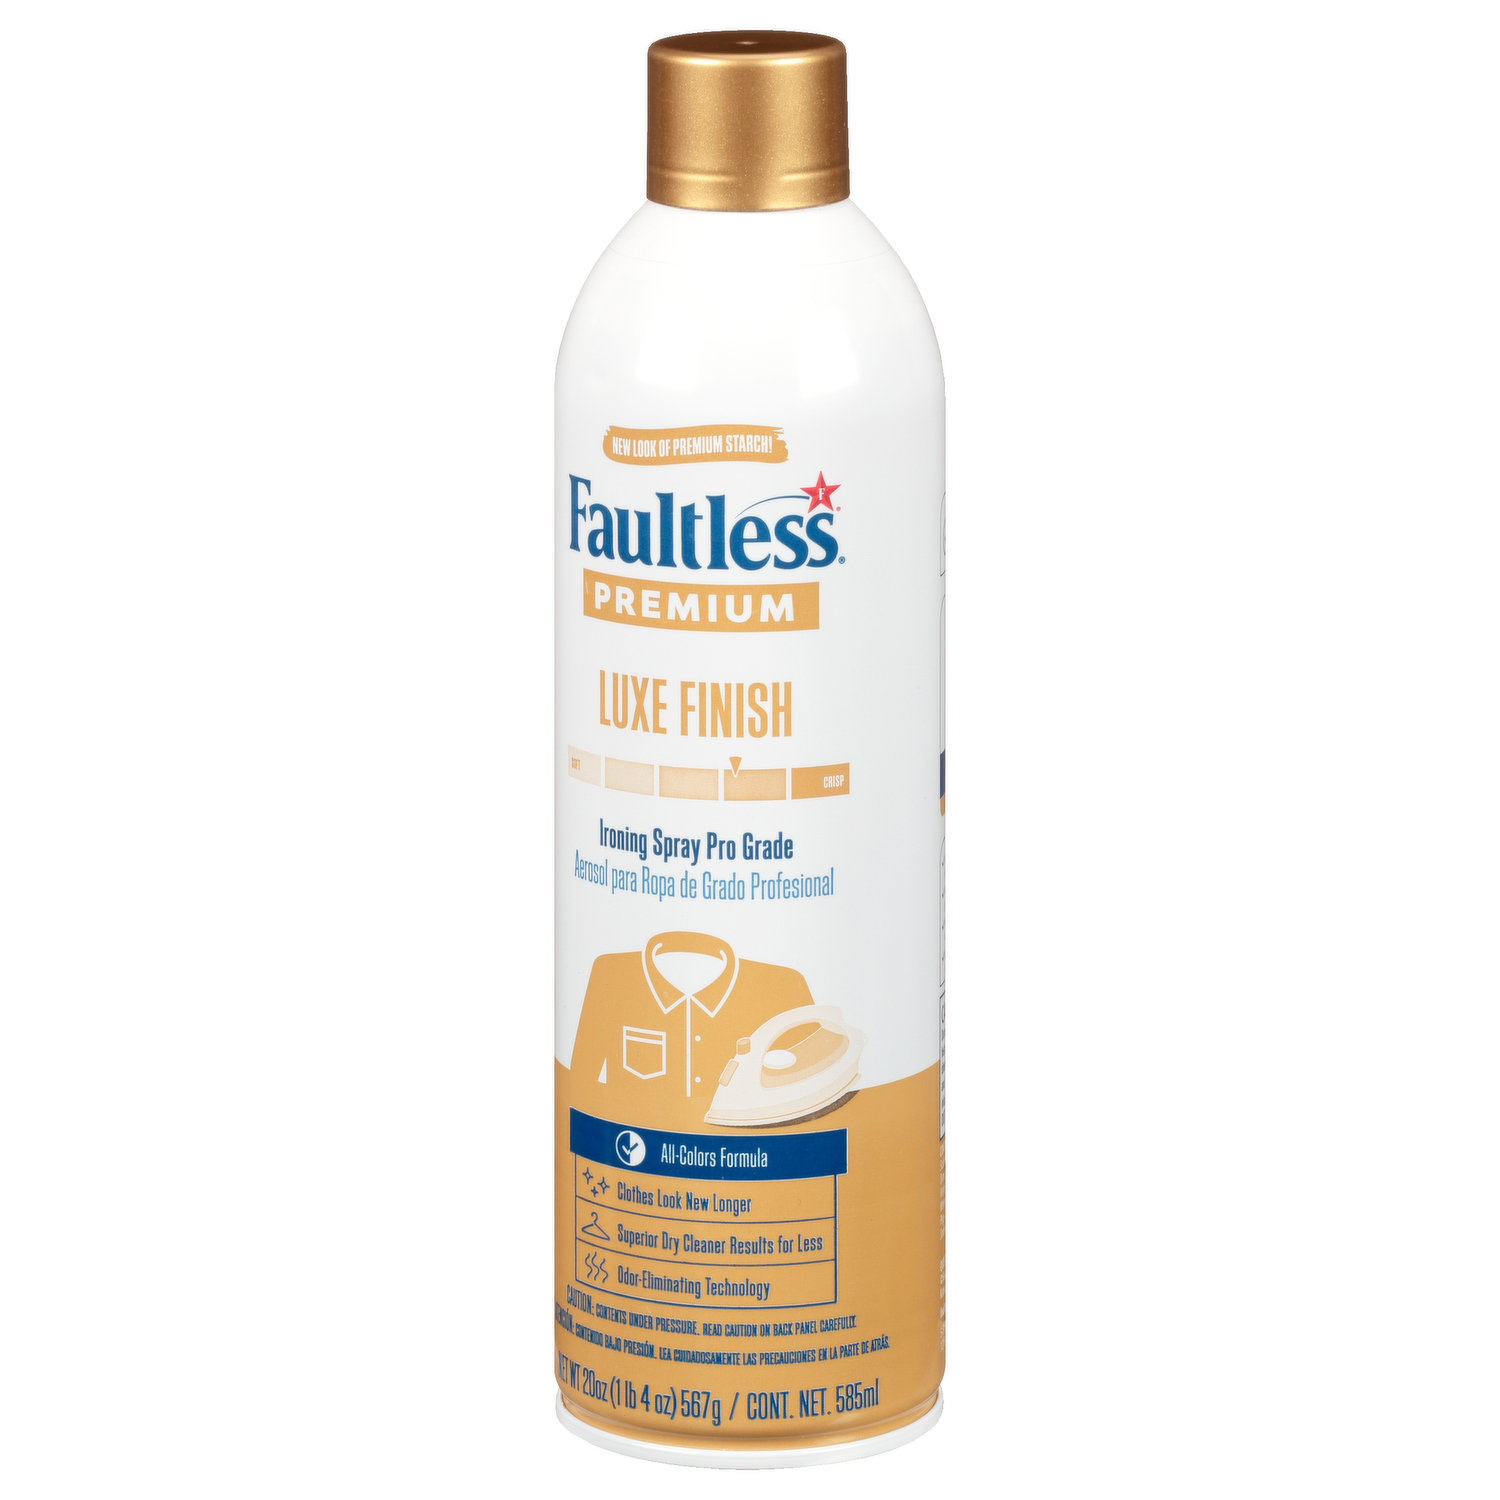 2) Faultless Premium Starch Luxe Finish Ironing Spray Pro Grade 20 Oz Each